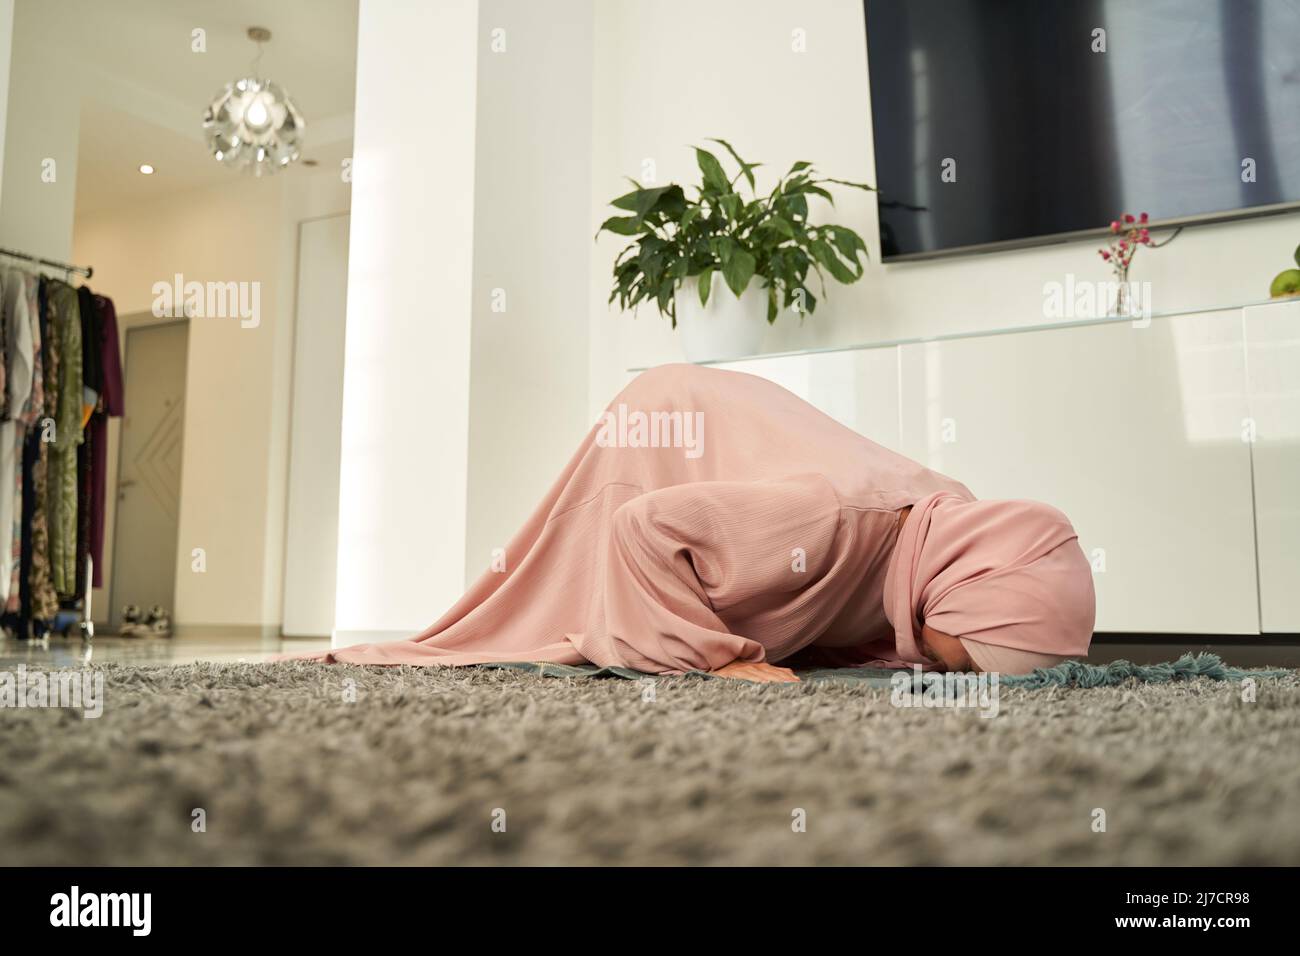 Muslim woman bowing down on praying carpet at home Stock Photo